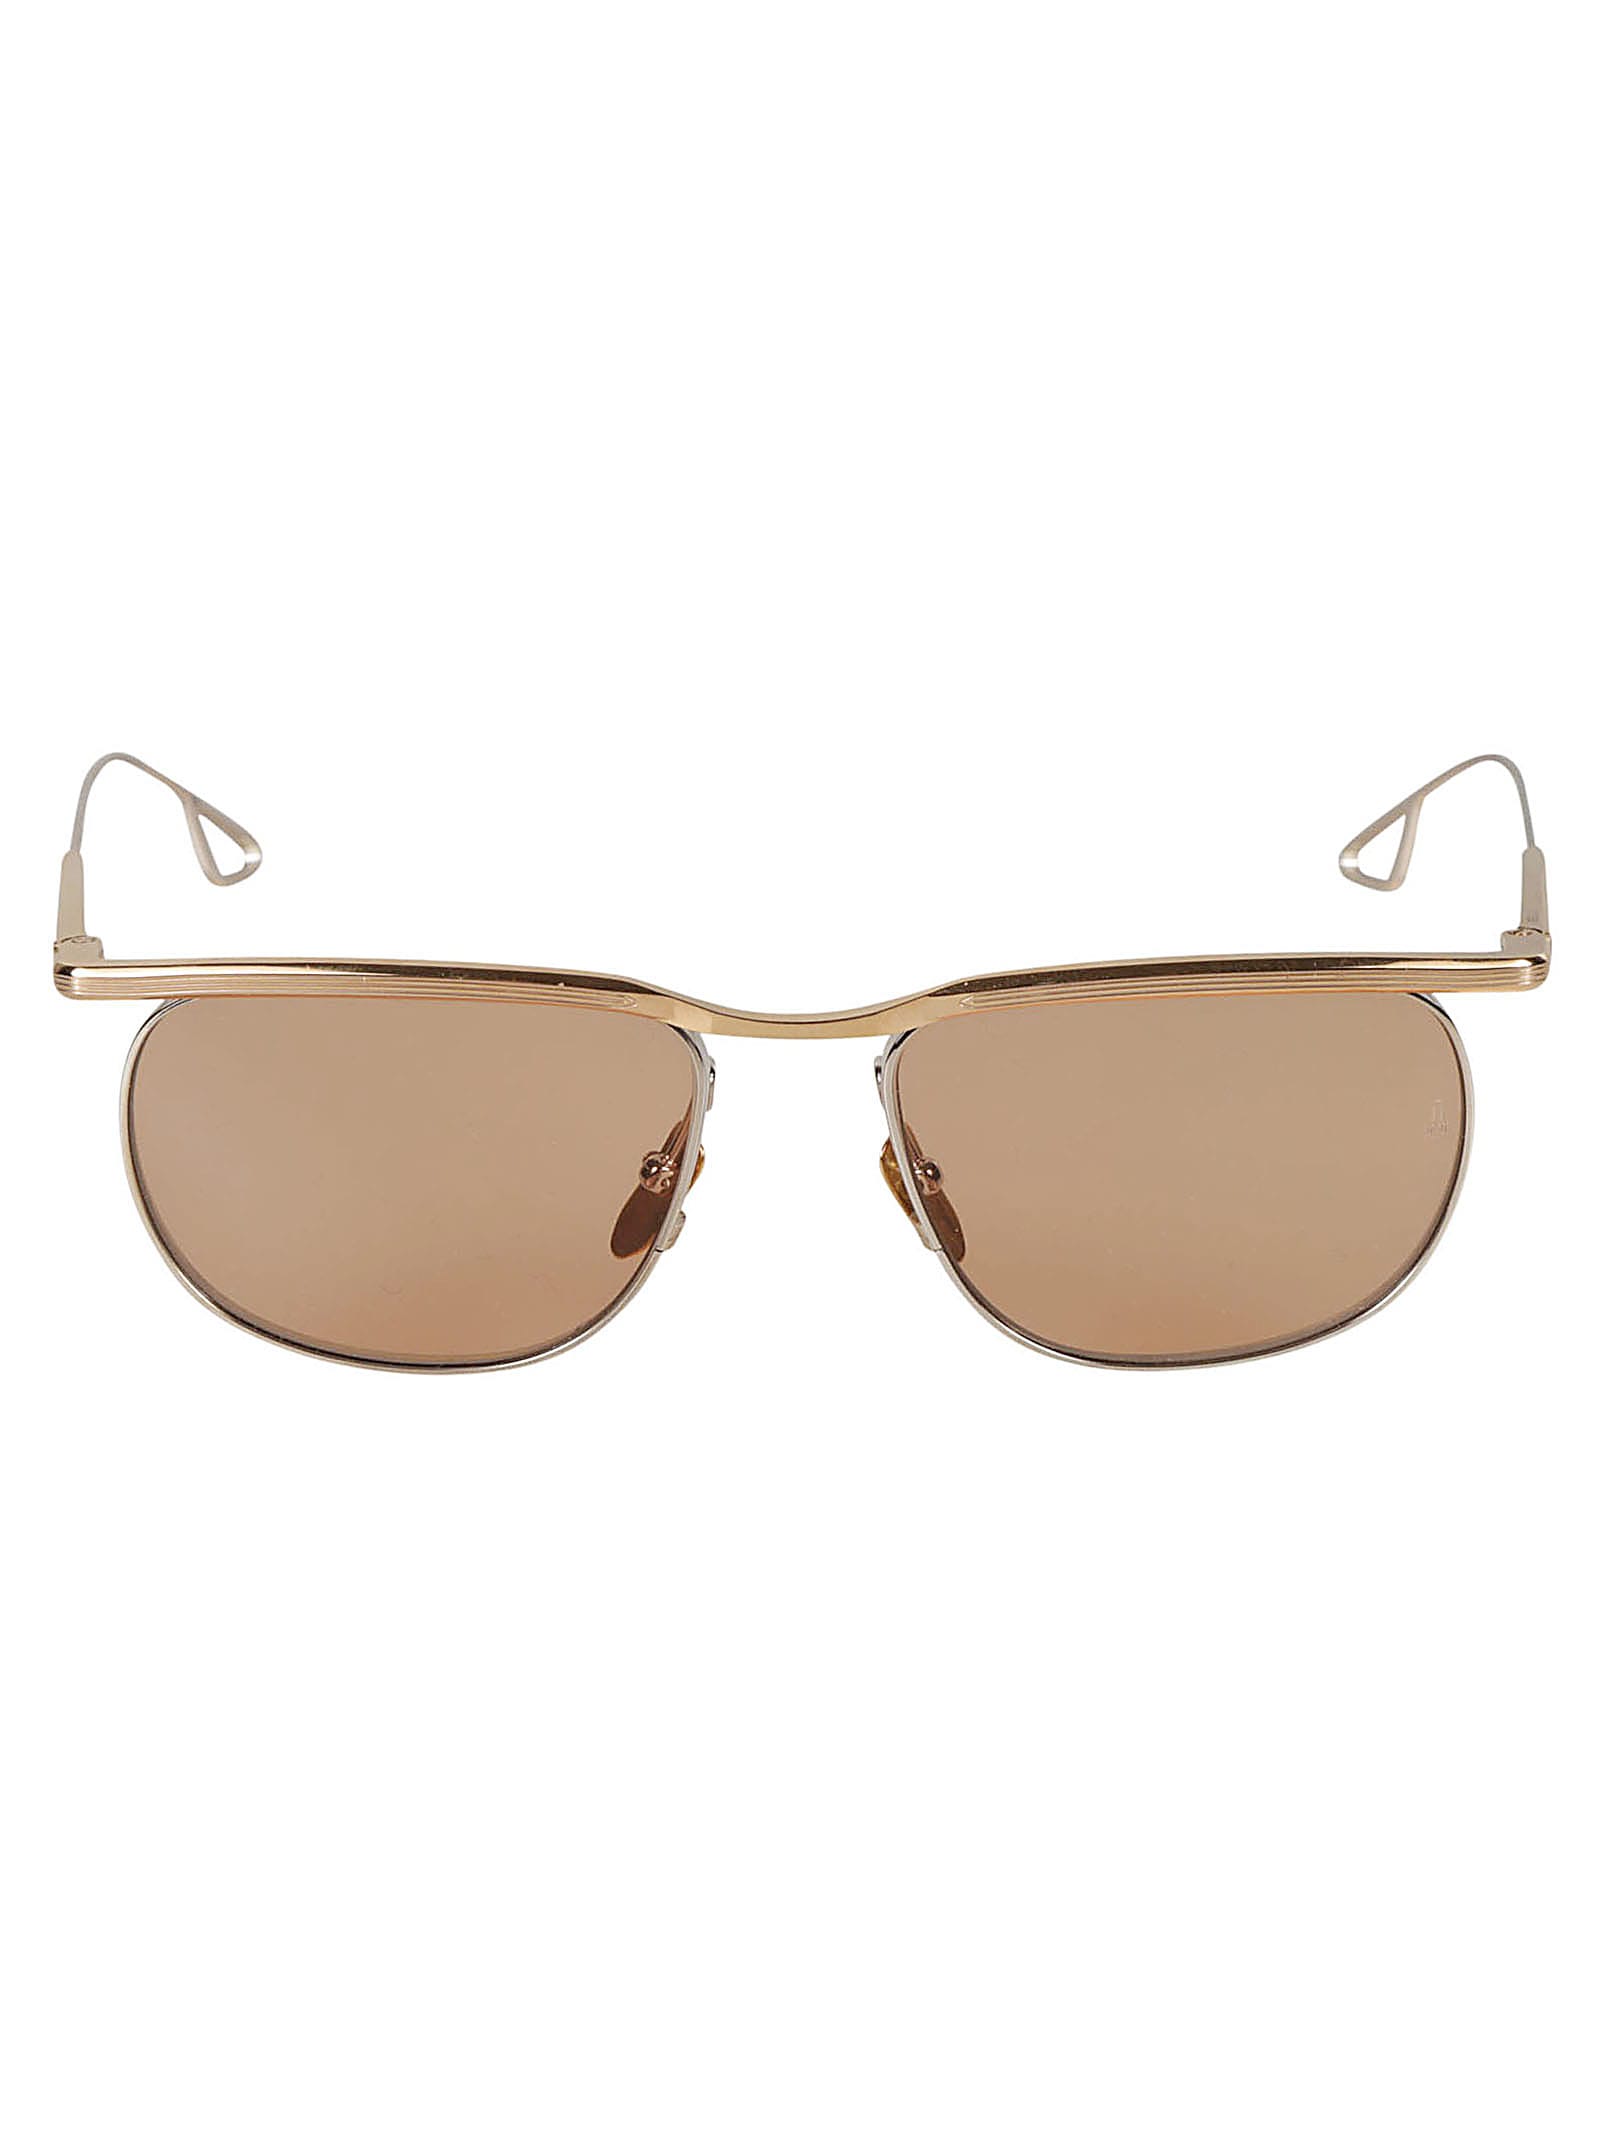 Jacques Marie Mage Seberg Sunglasses Sunglasses In Gold